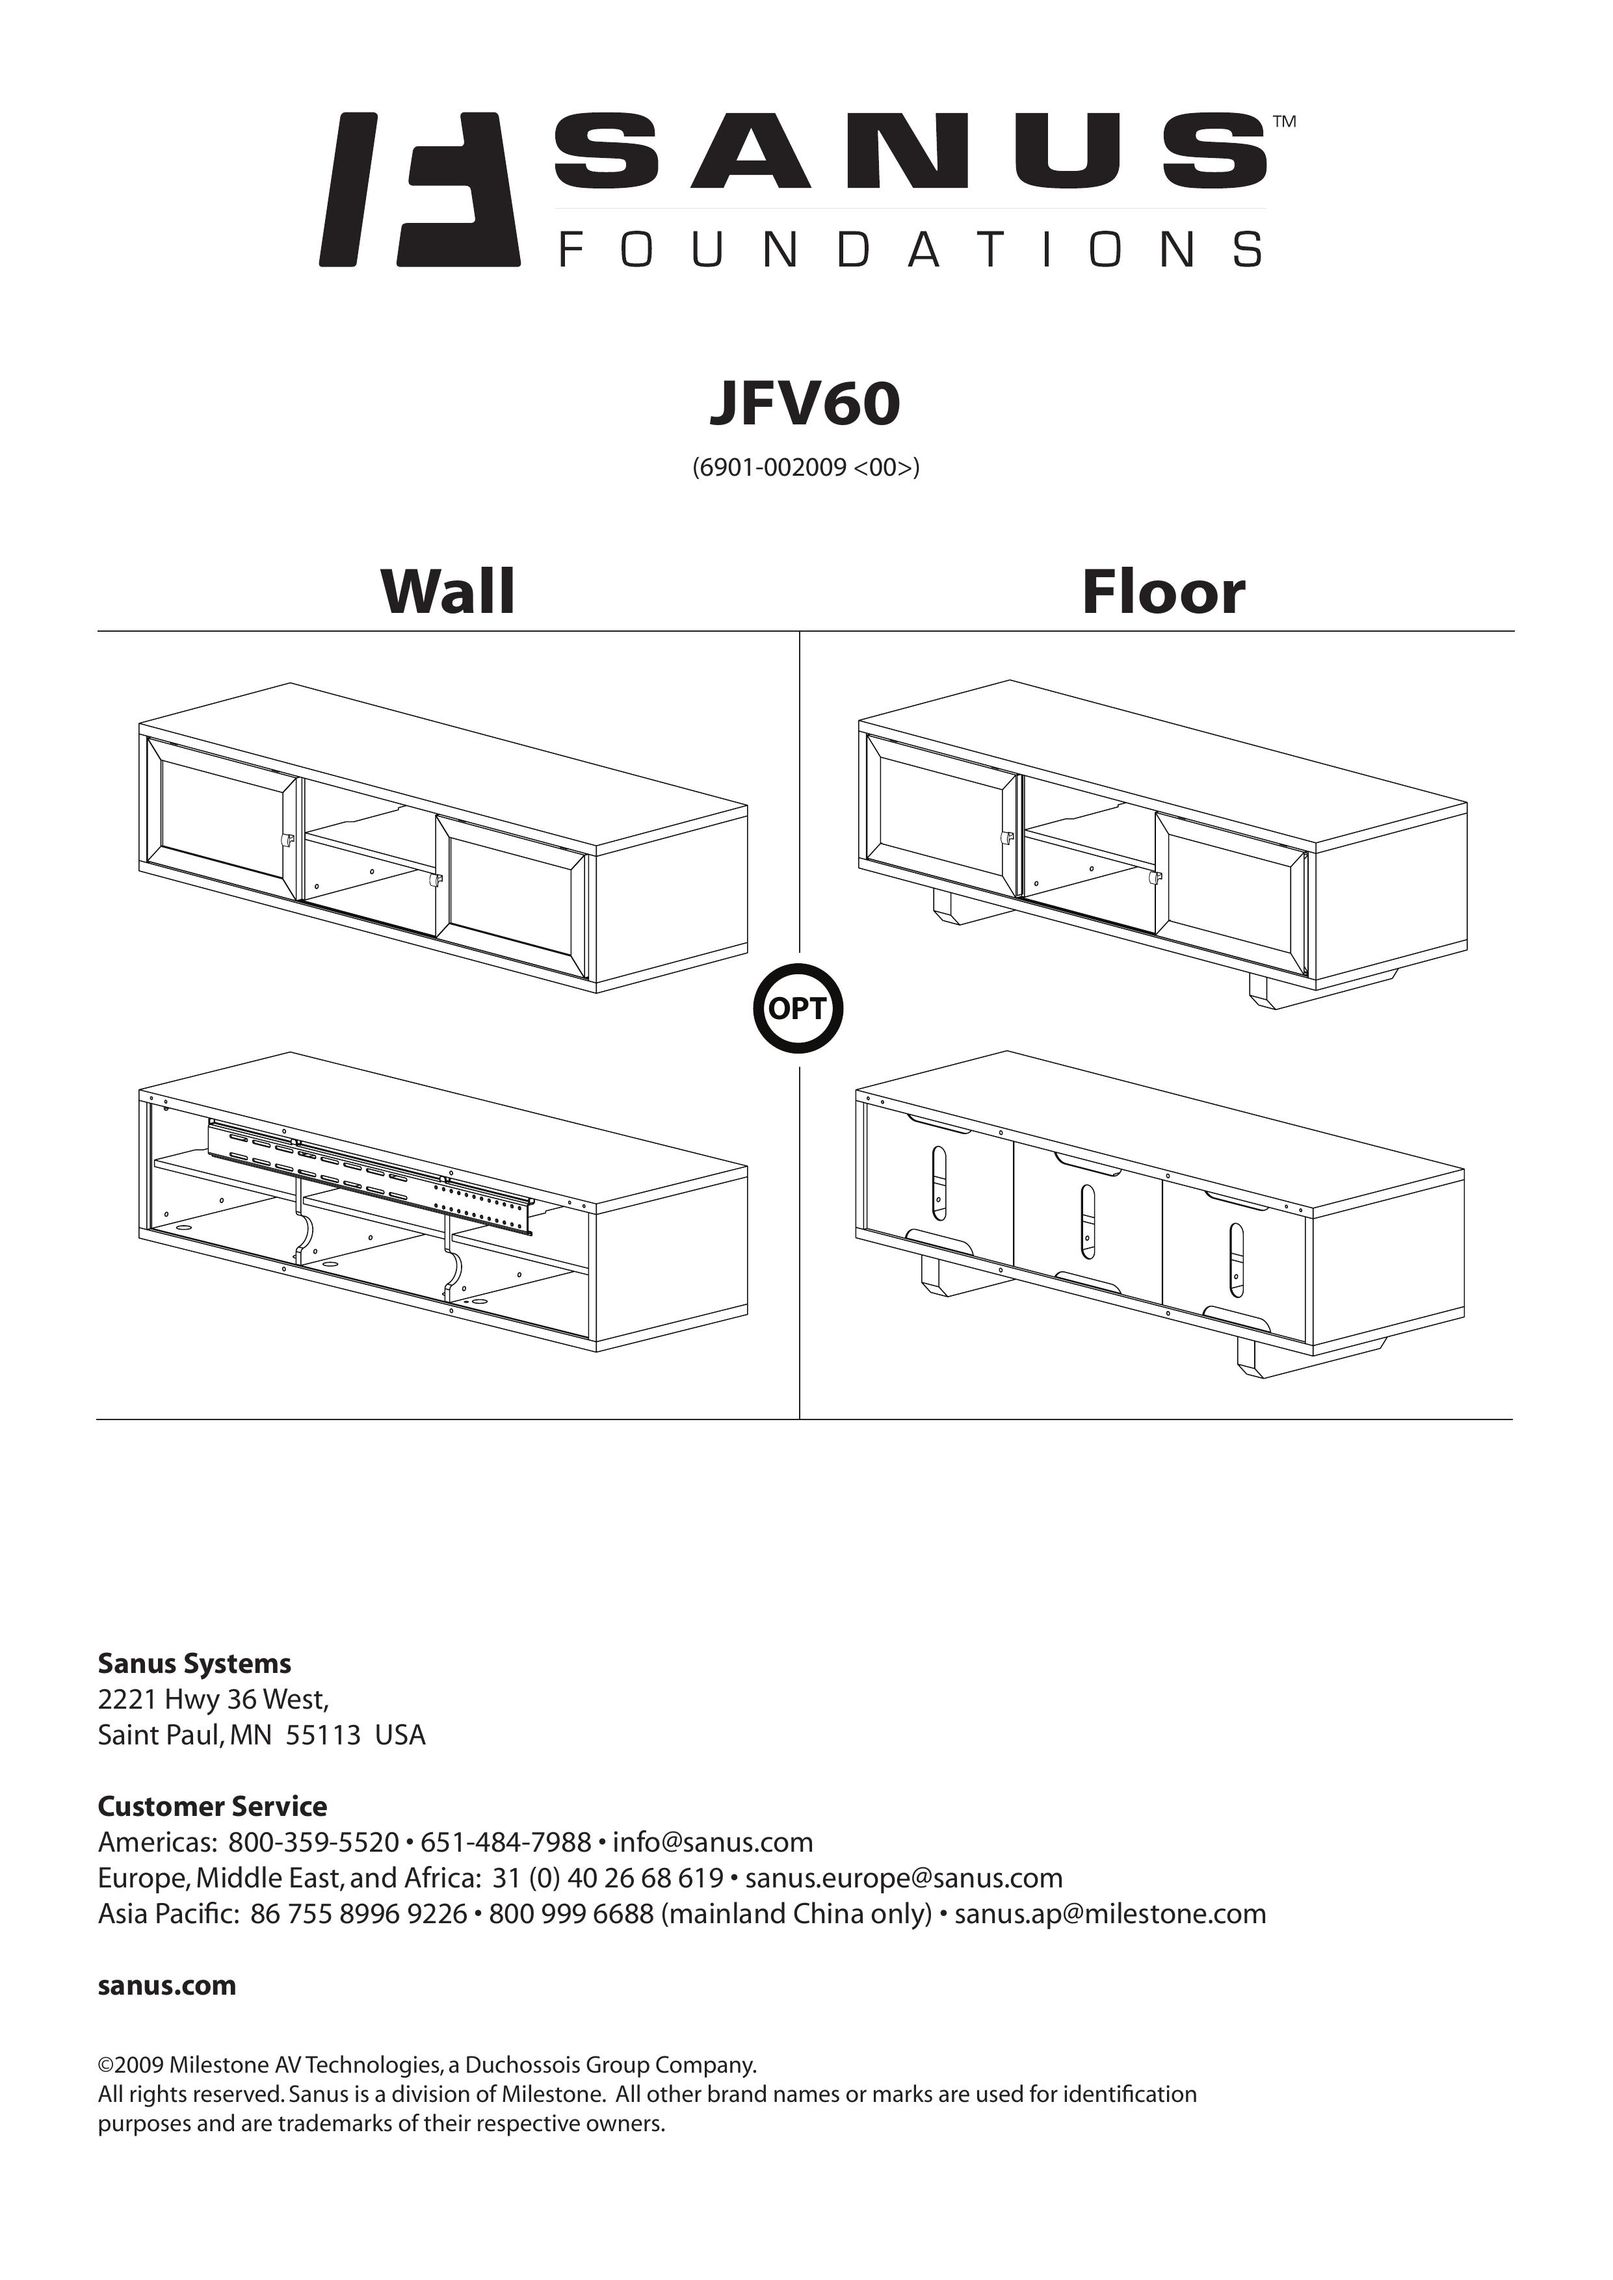 Sanus Systems JFV60 Indoor Furnishings User Manual